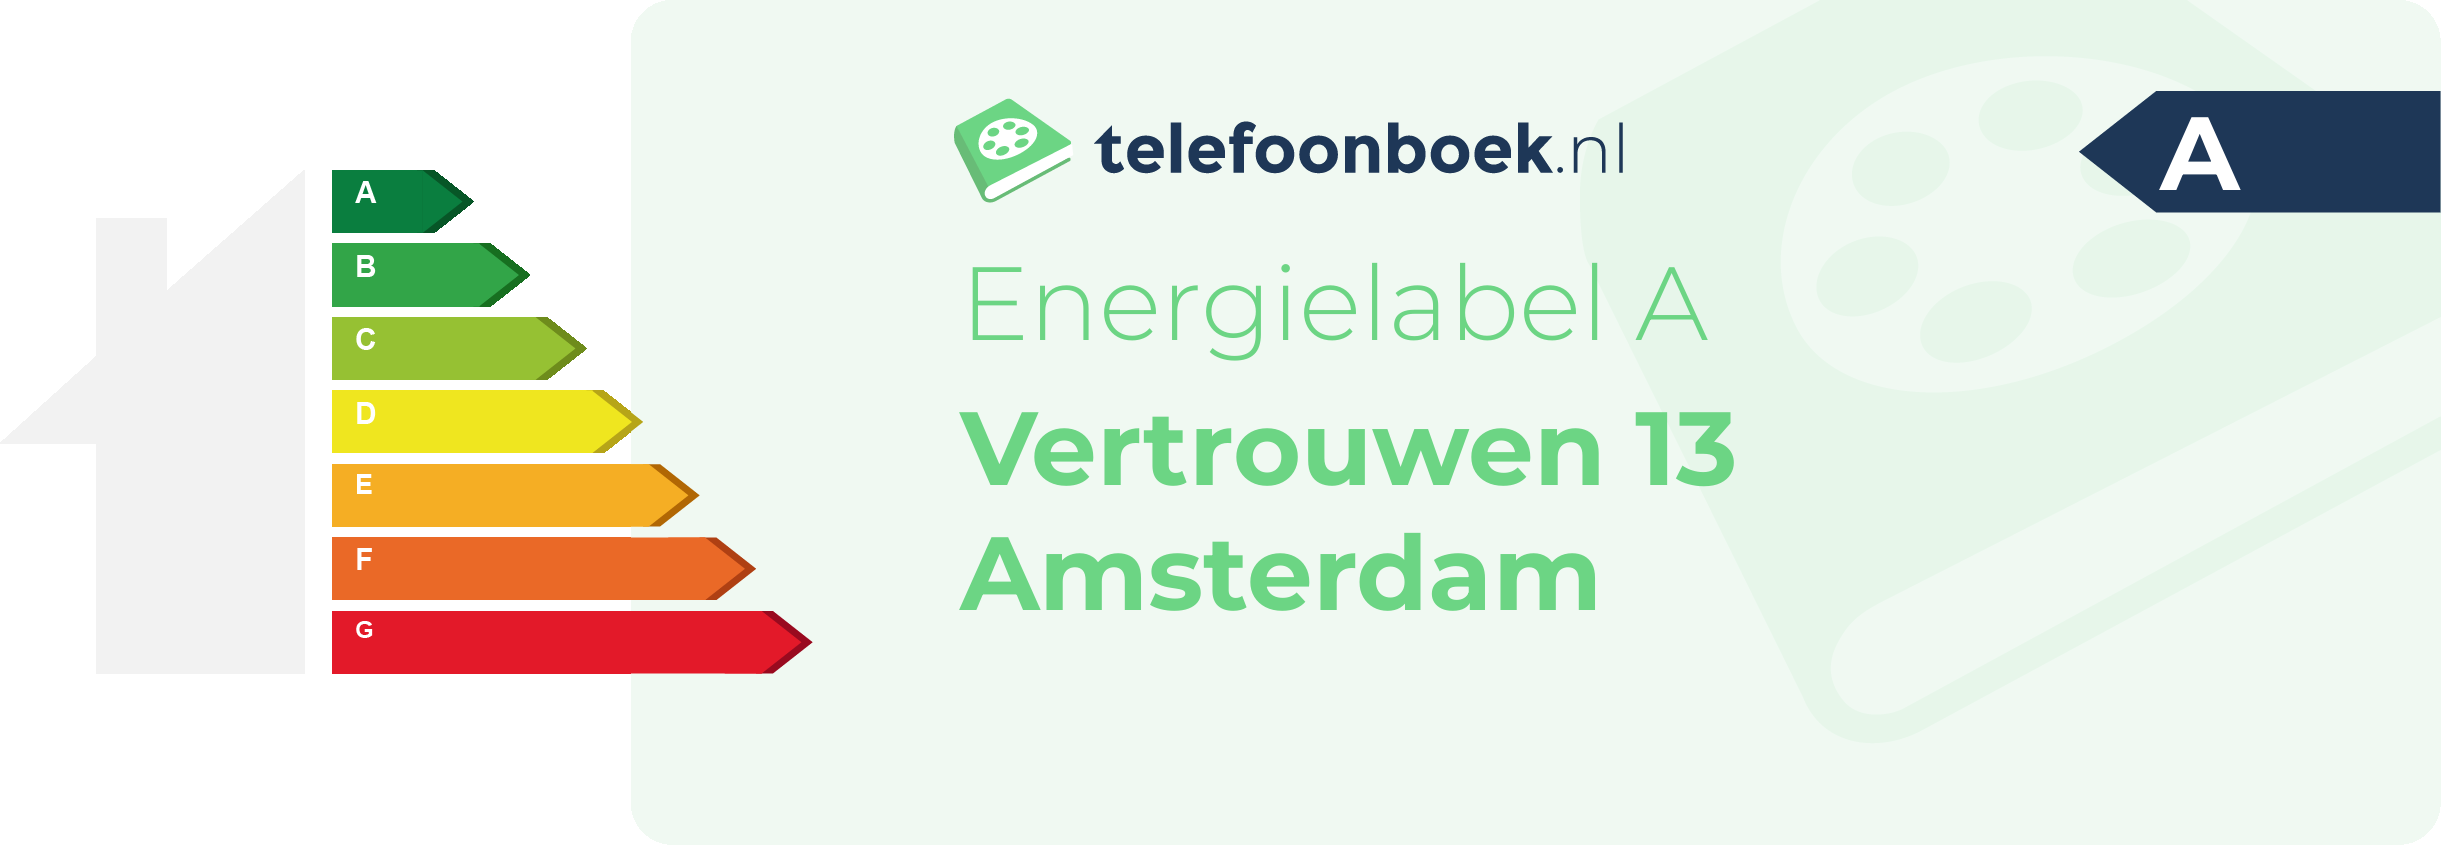 Energielabel Vertrouwen 13 Amsterdam